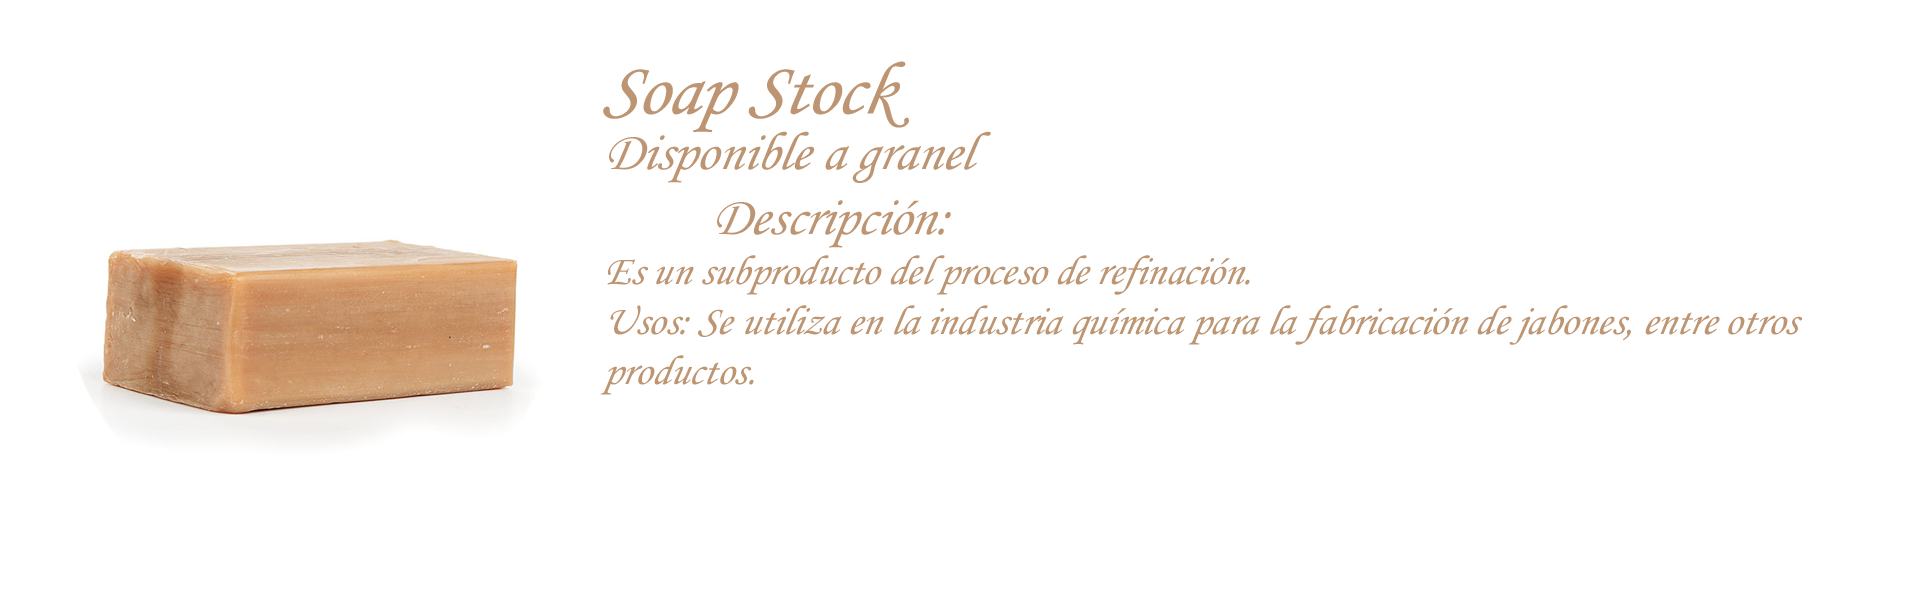 Soap Stock